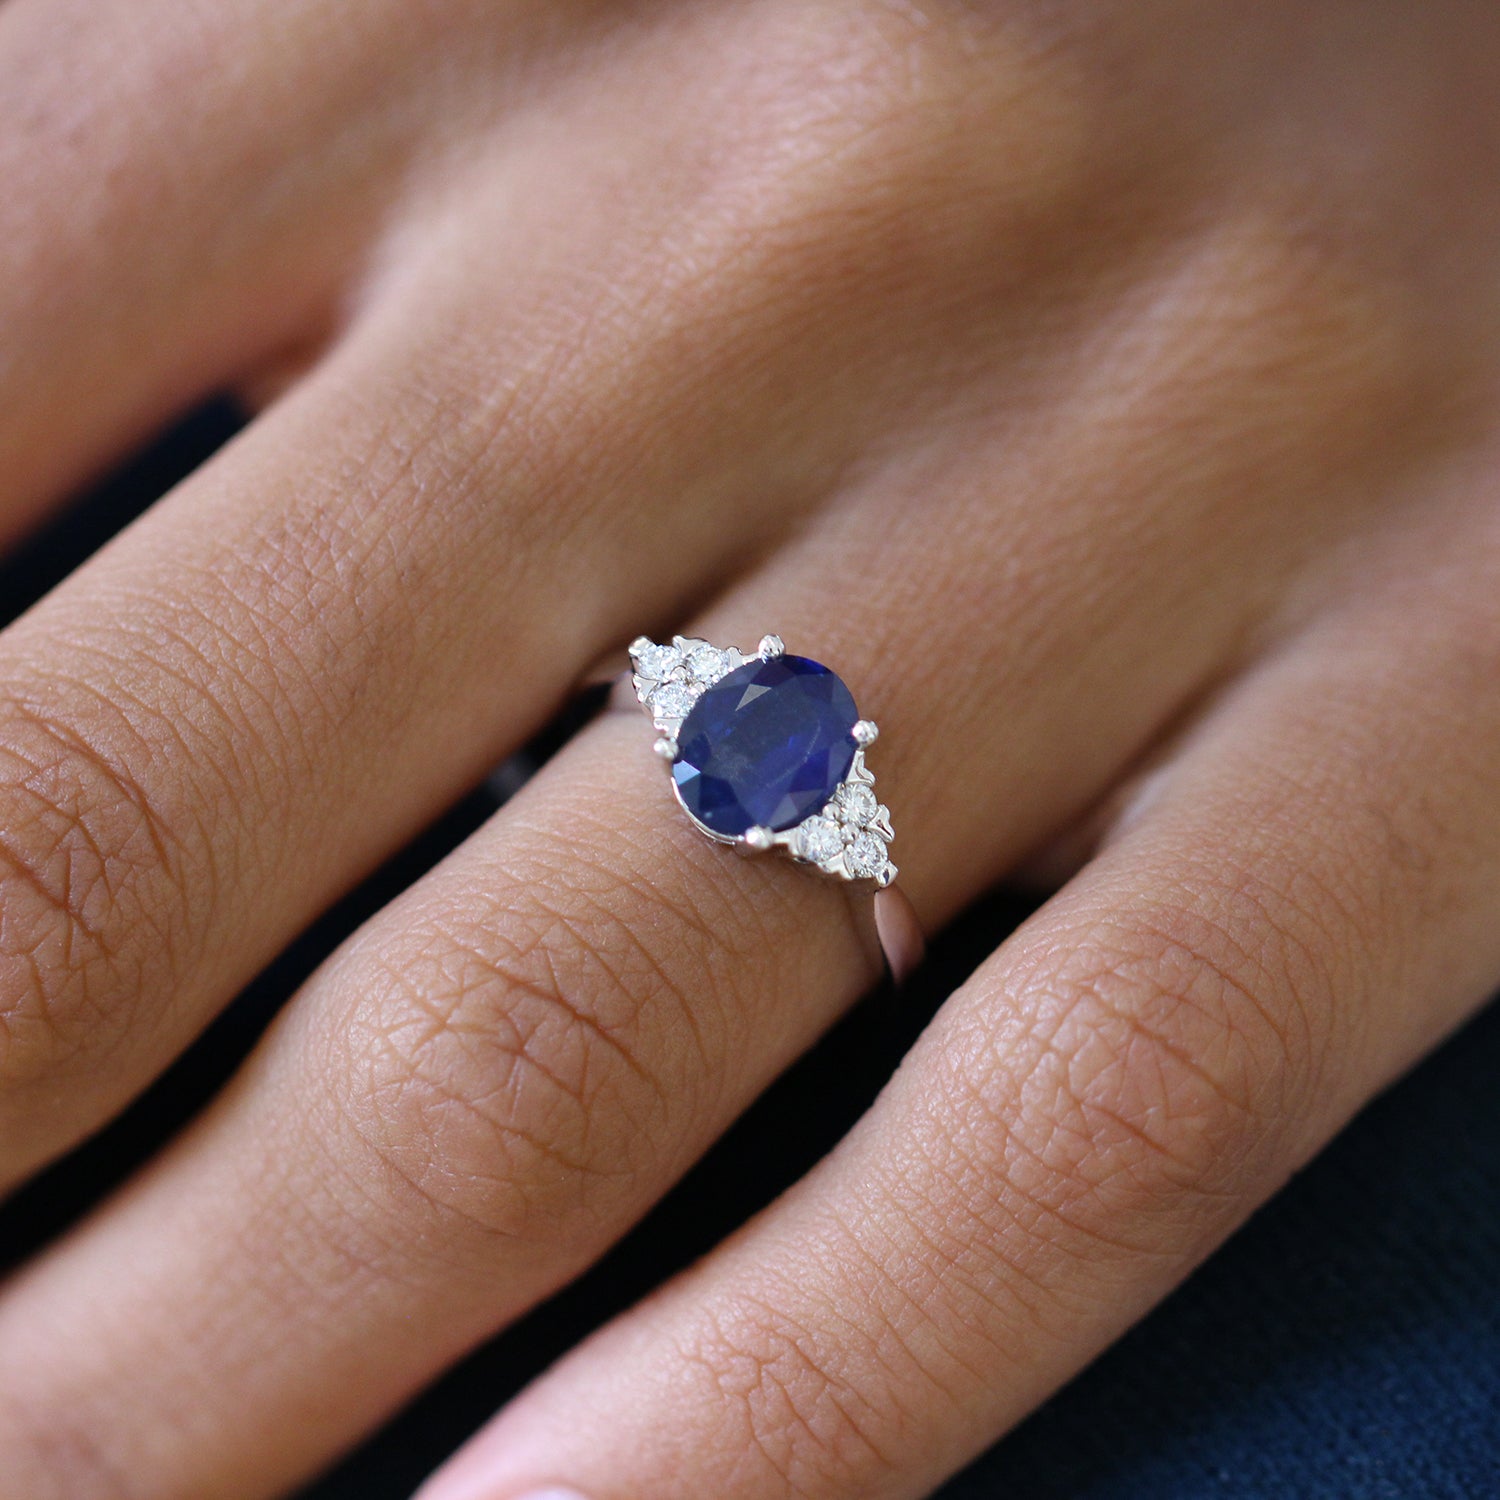 ronan campbell 18k white gold blue sapphire diamond engagement ring designyard contemporary jewellery gallery dublin ireland 1